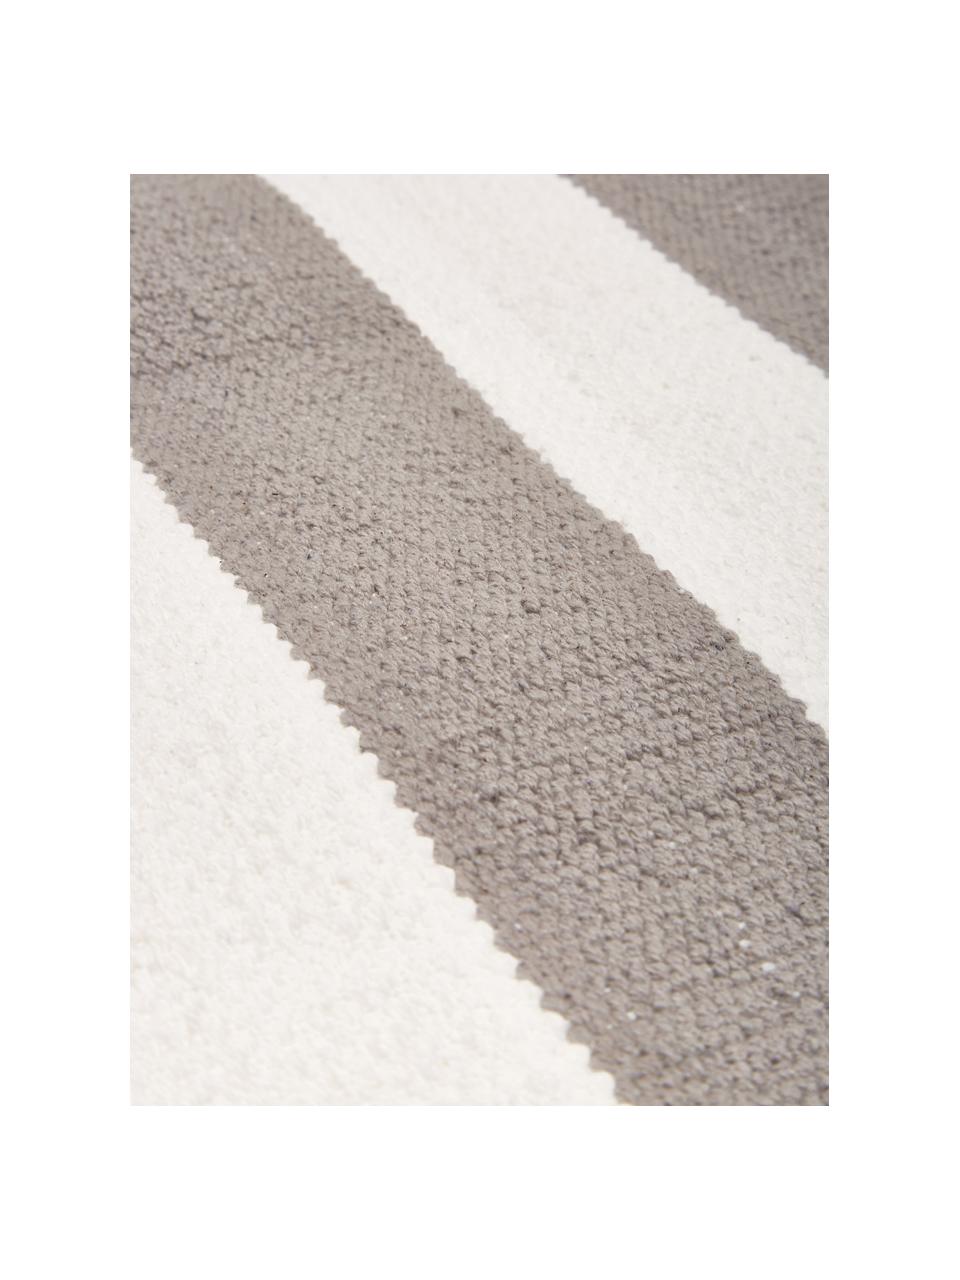 Gestreifter Baumwollteppich Blocker in Grau/Weiß, handgewebt, 100 % Baumwolle, GRS-zertifiziert, Grau, B 200 x L 300 cm (Größe L)